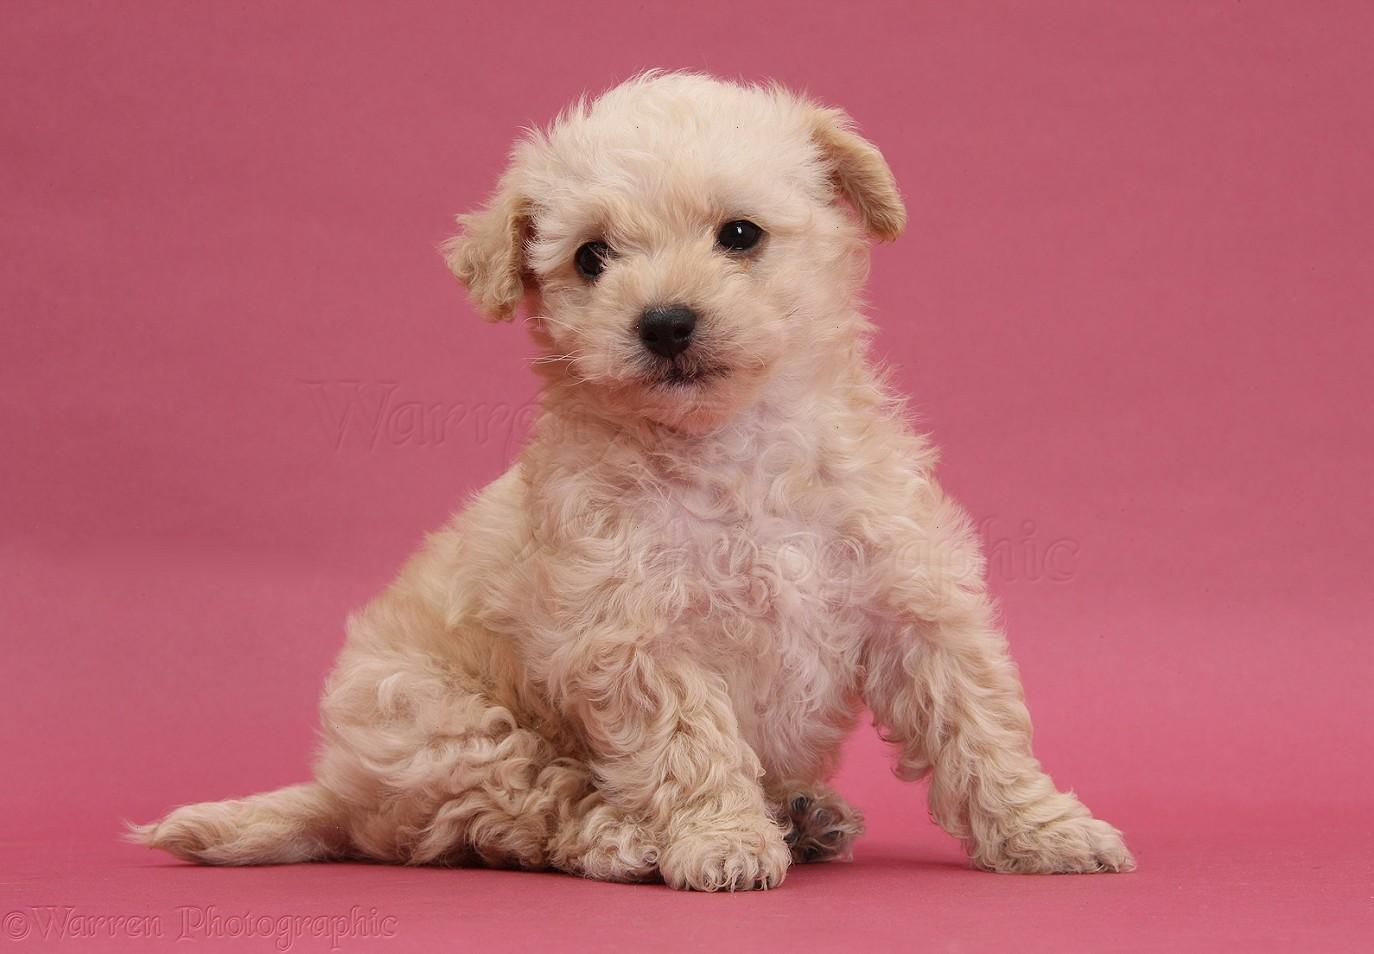 Dog: Cute Bichon x Yorkie pup on pink background photo WP37871